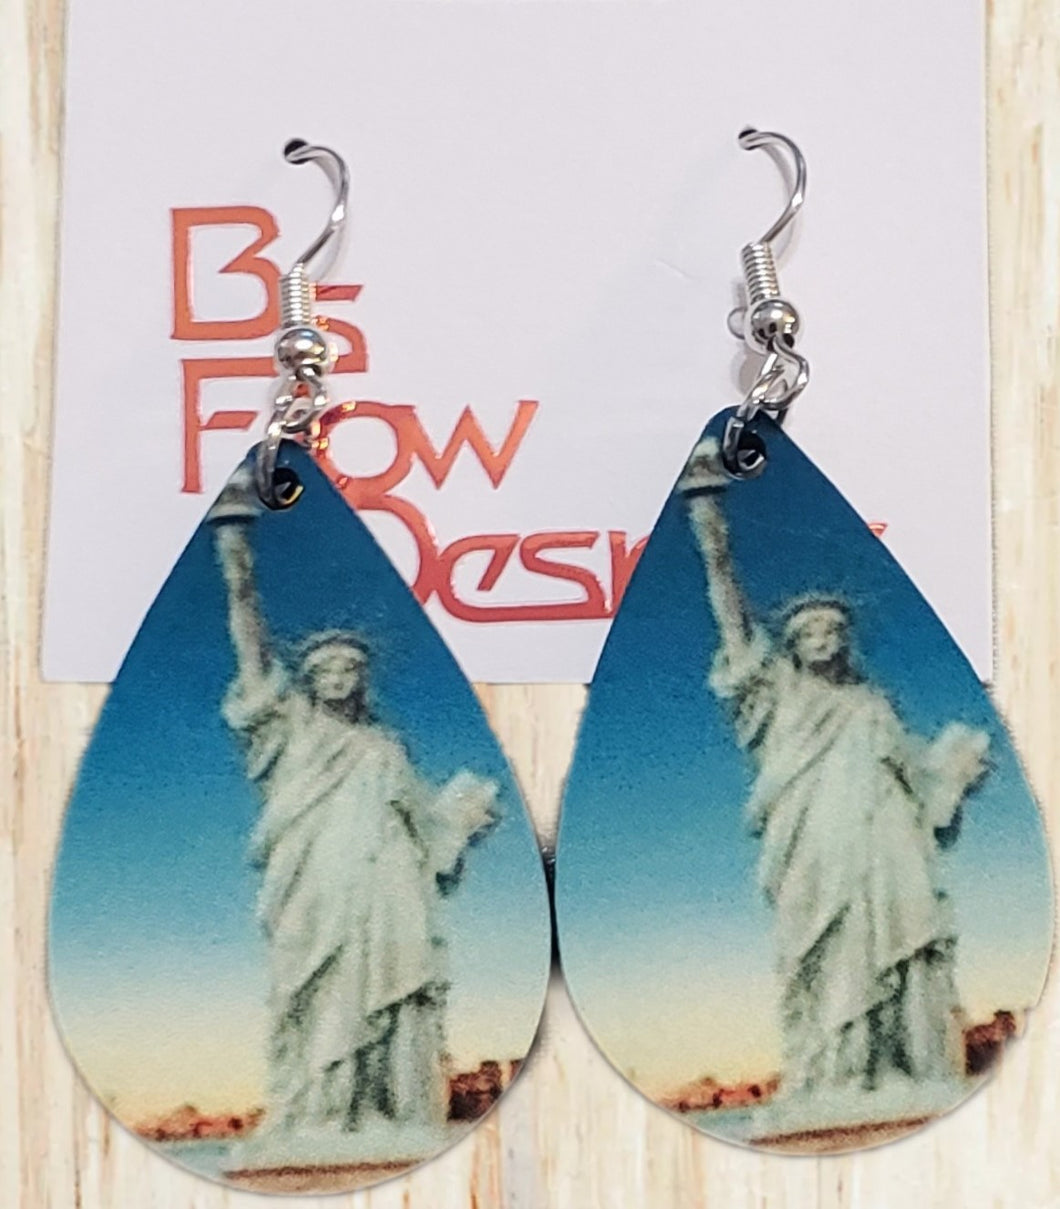 Statue of Liberty Earrings